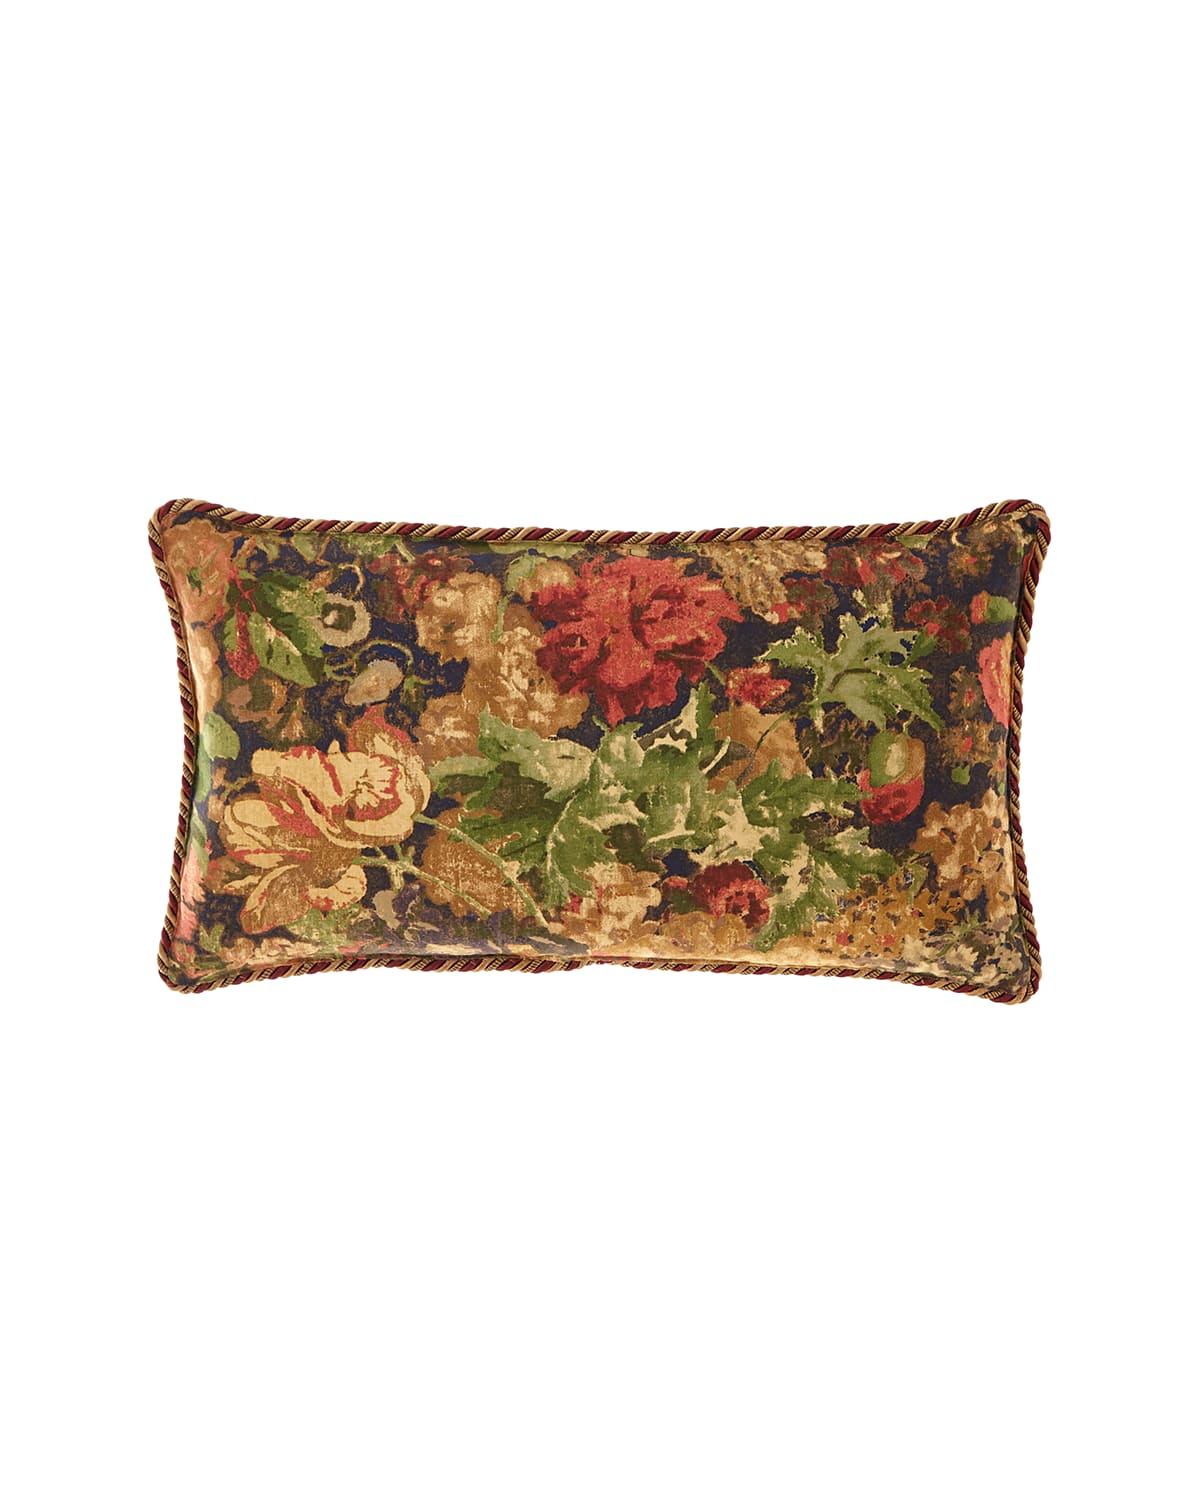 Image Dian Austin Couture Home Rose de Rescht Floral Oblong Pillow